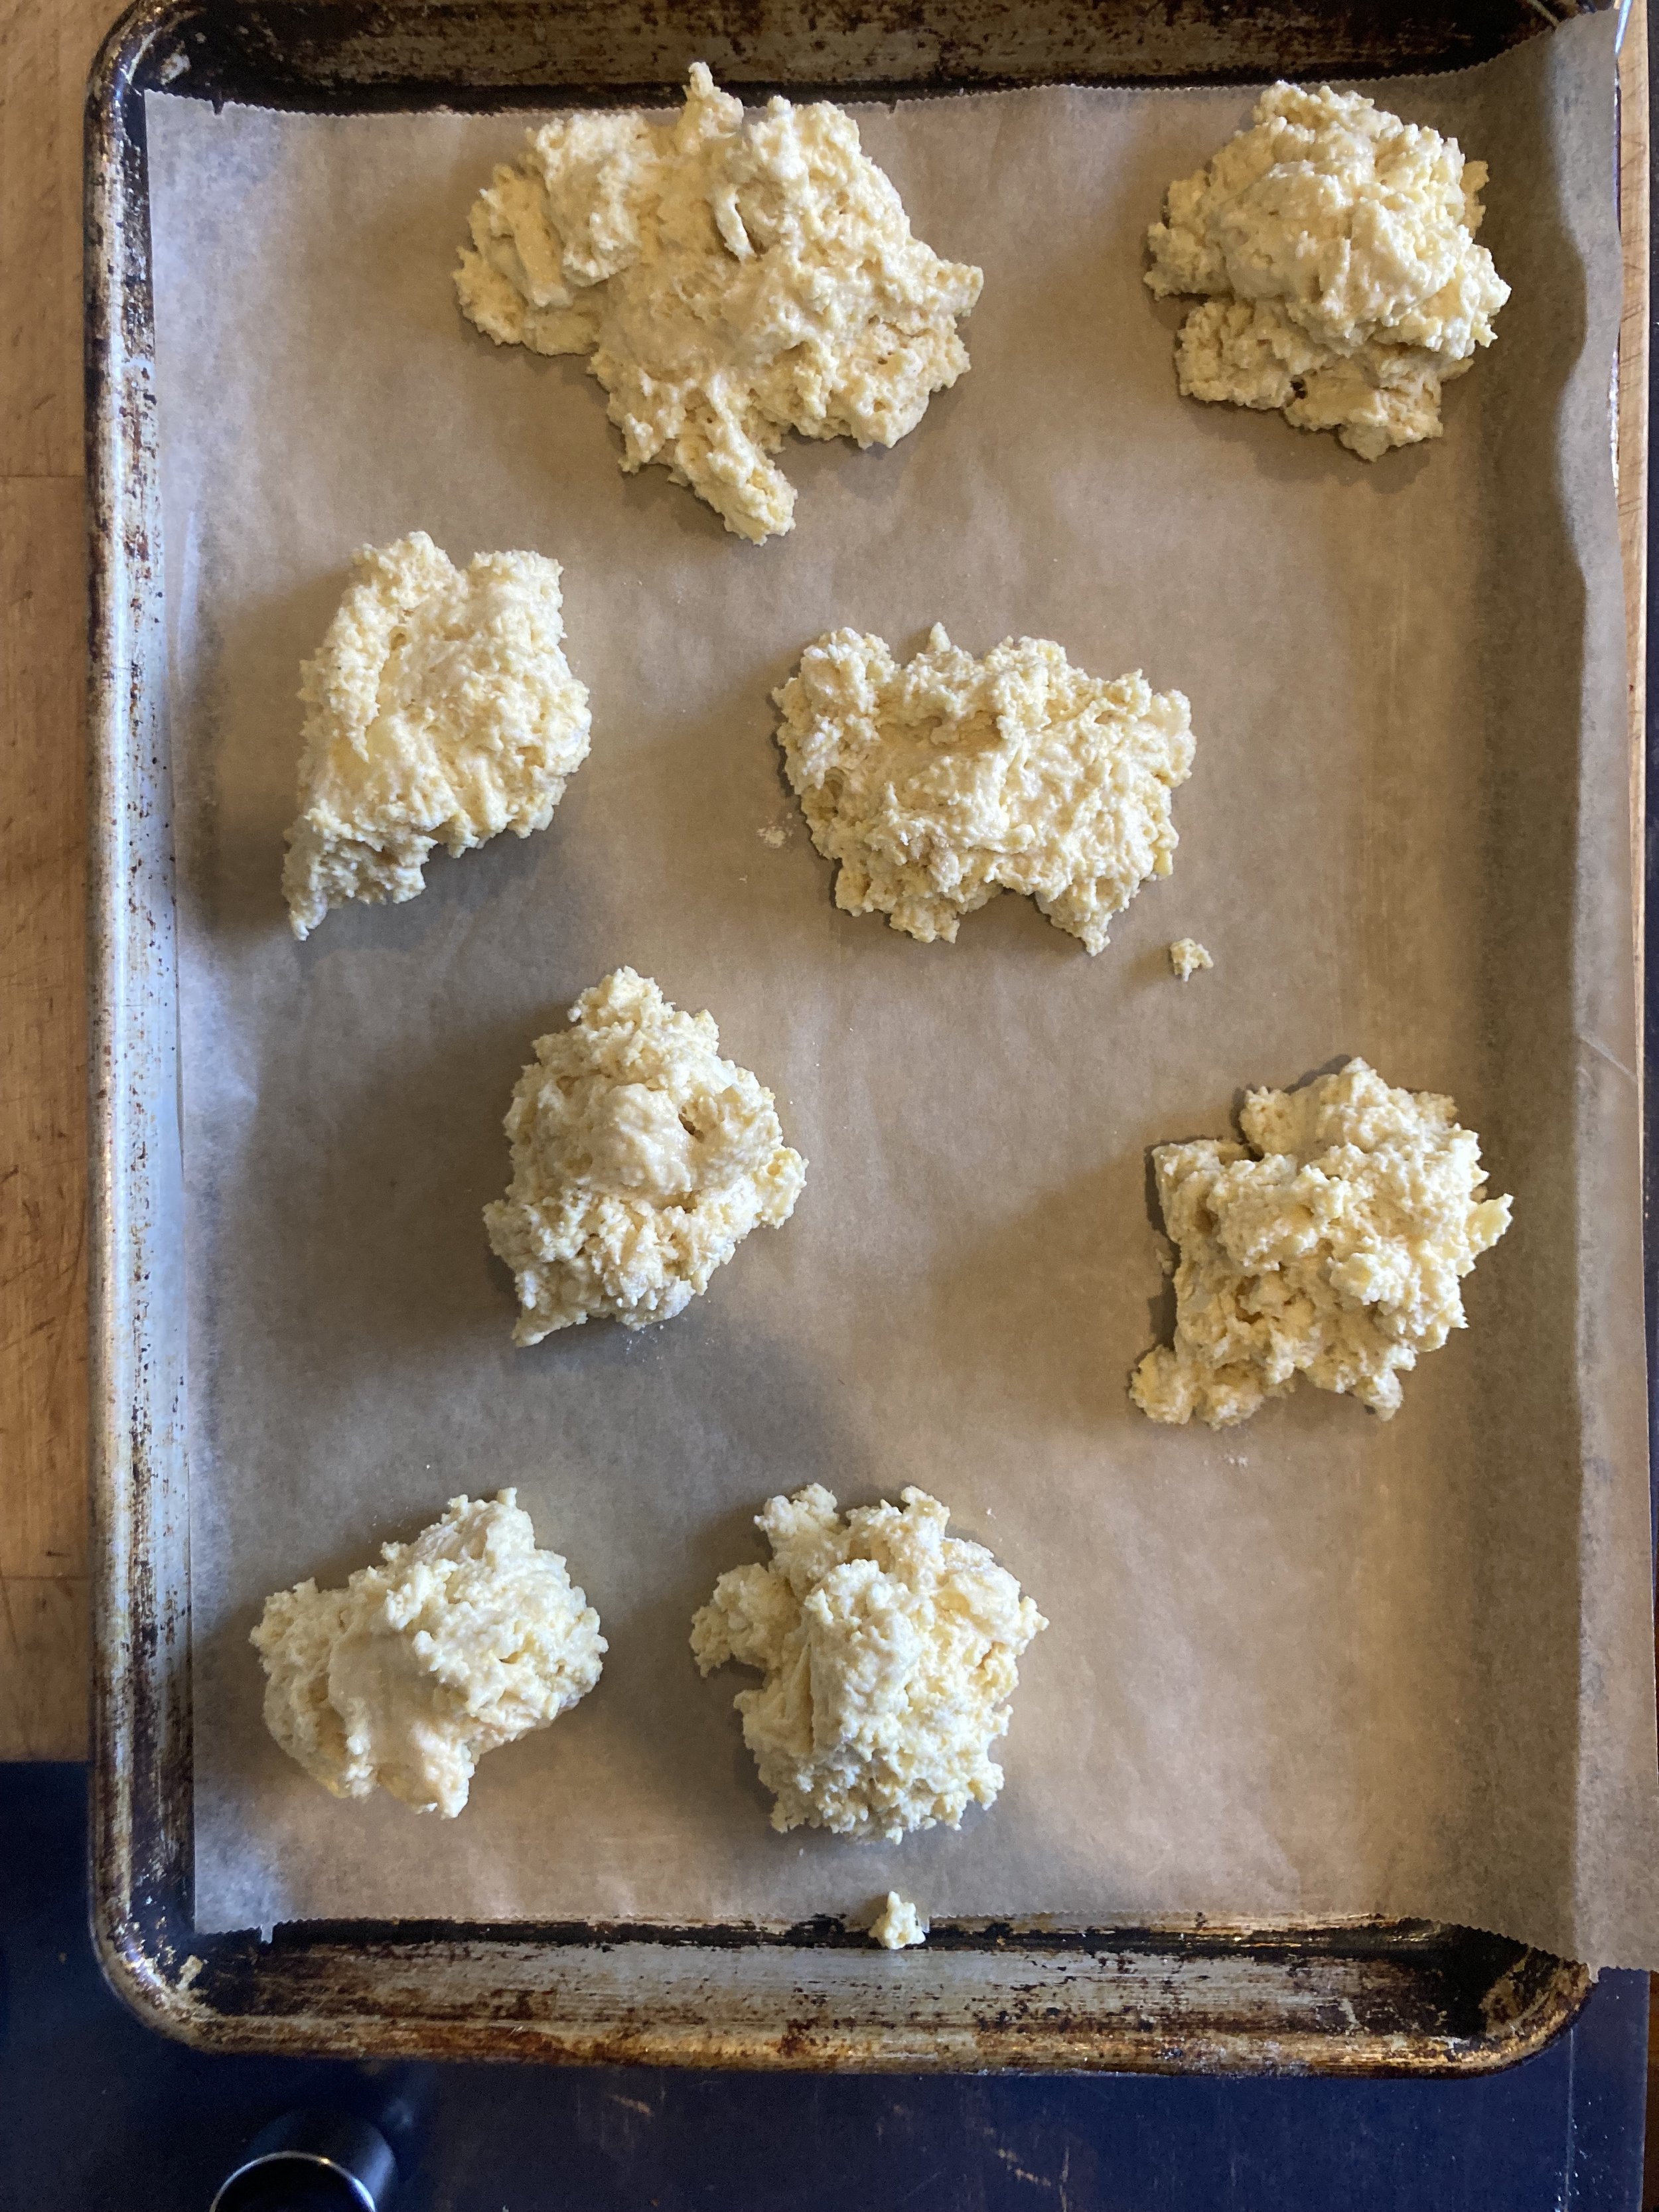 cornmeal biscuits kit photo3.jpg